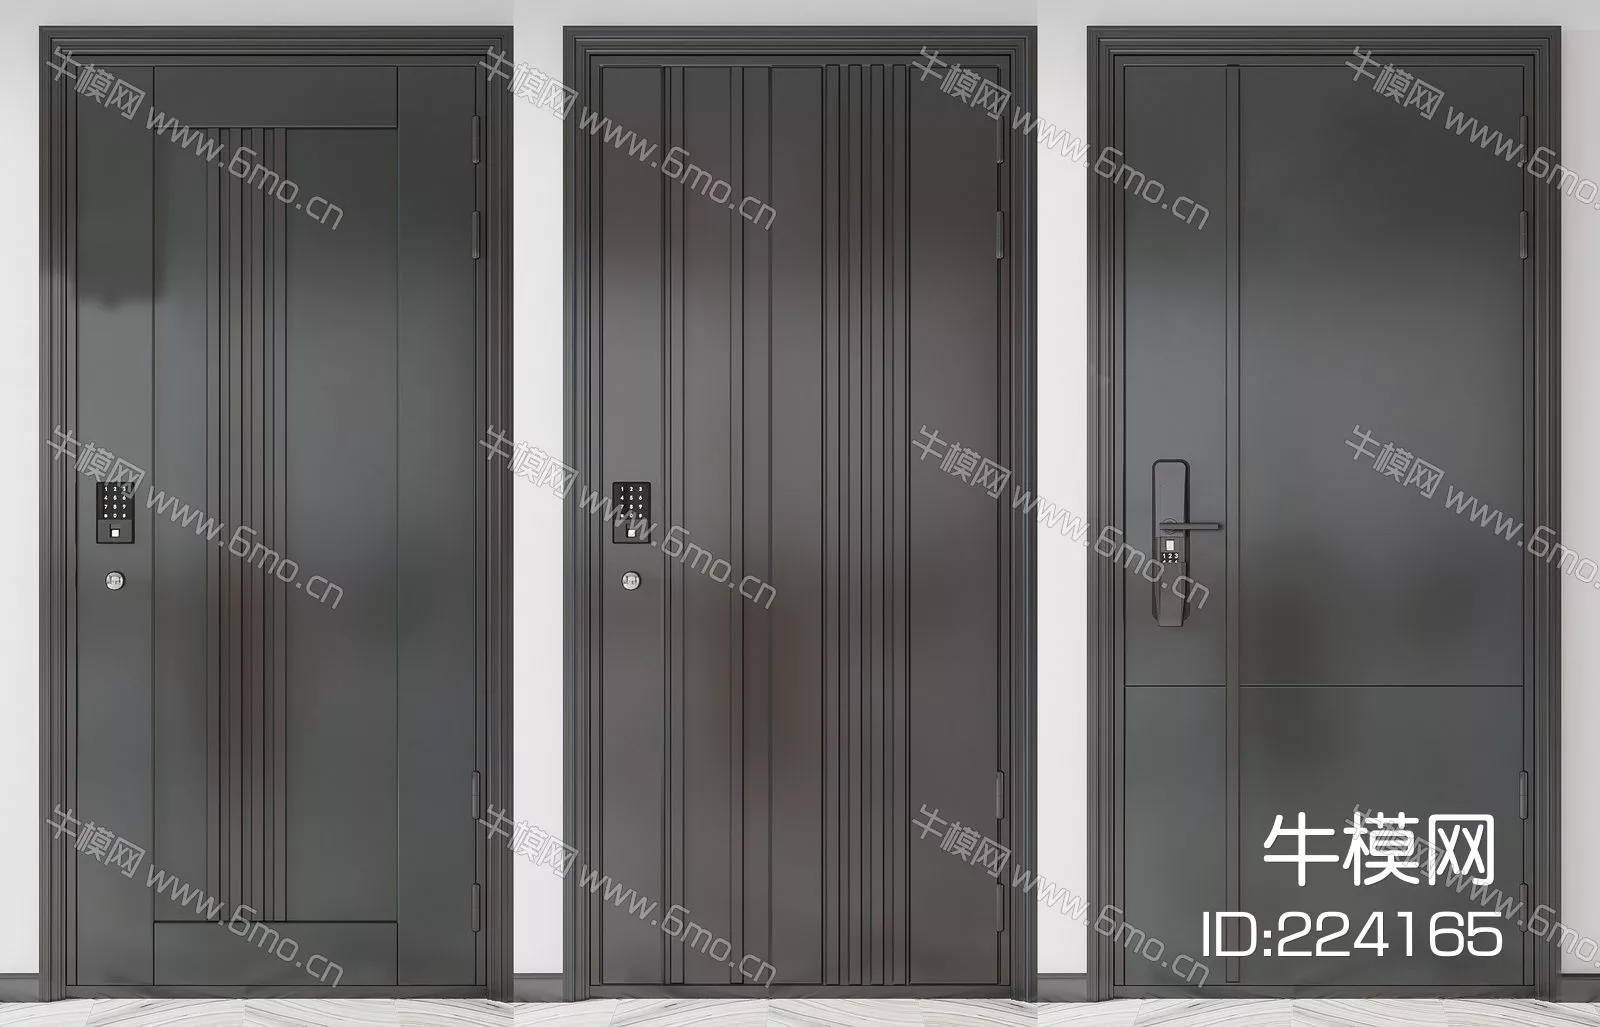 MODERN DOOR AND WINDOWS - SKETCHUP 3D MODEL - ENSCAPE - 224165